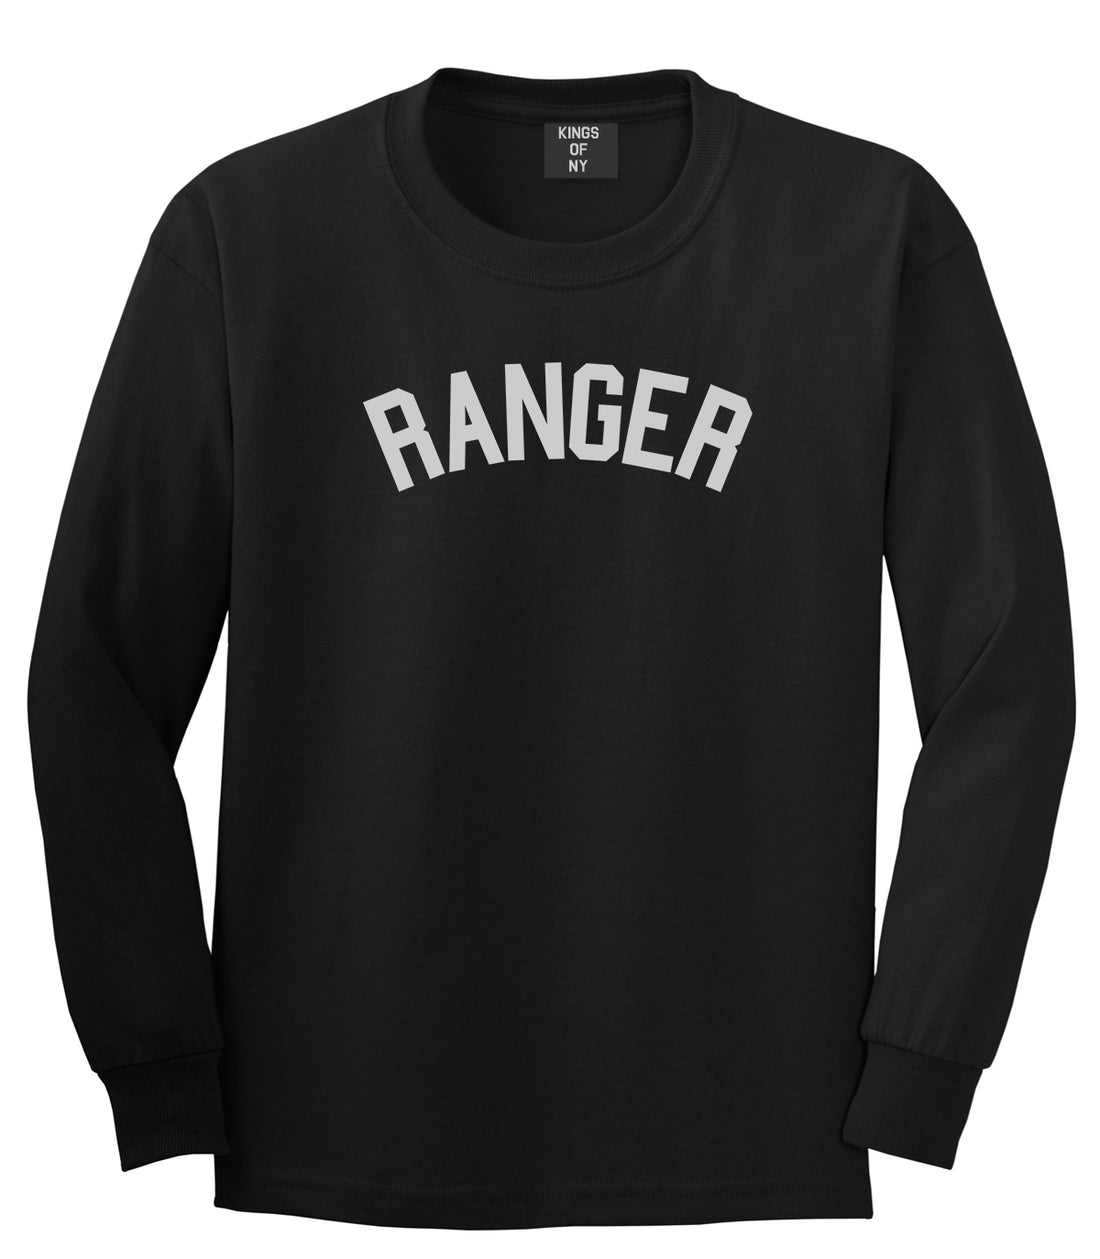 Ranger Mens Black Long Sleeve T-Shirt by Kings Of NY